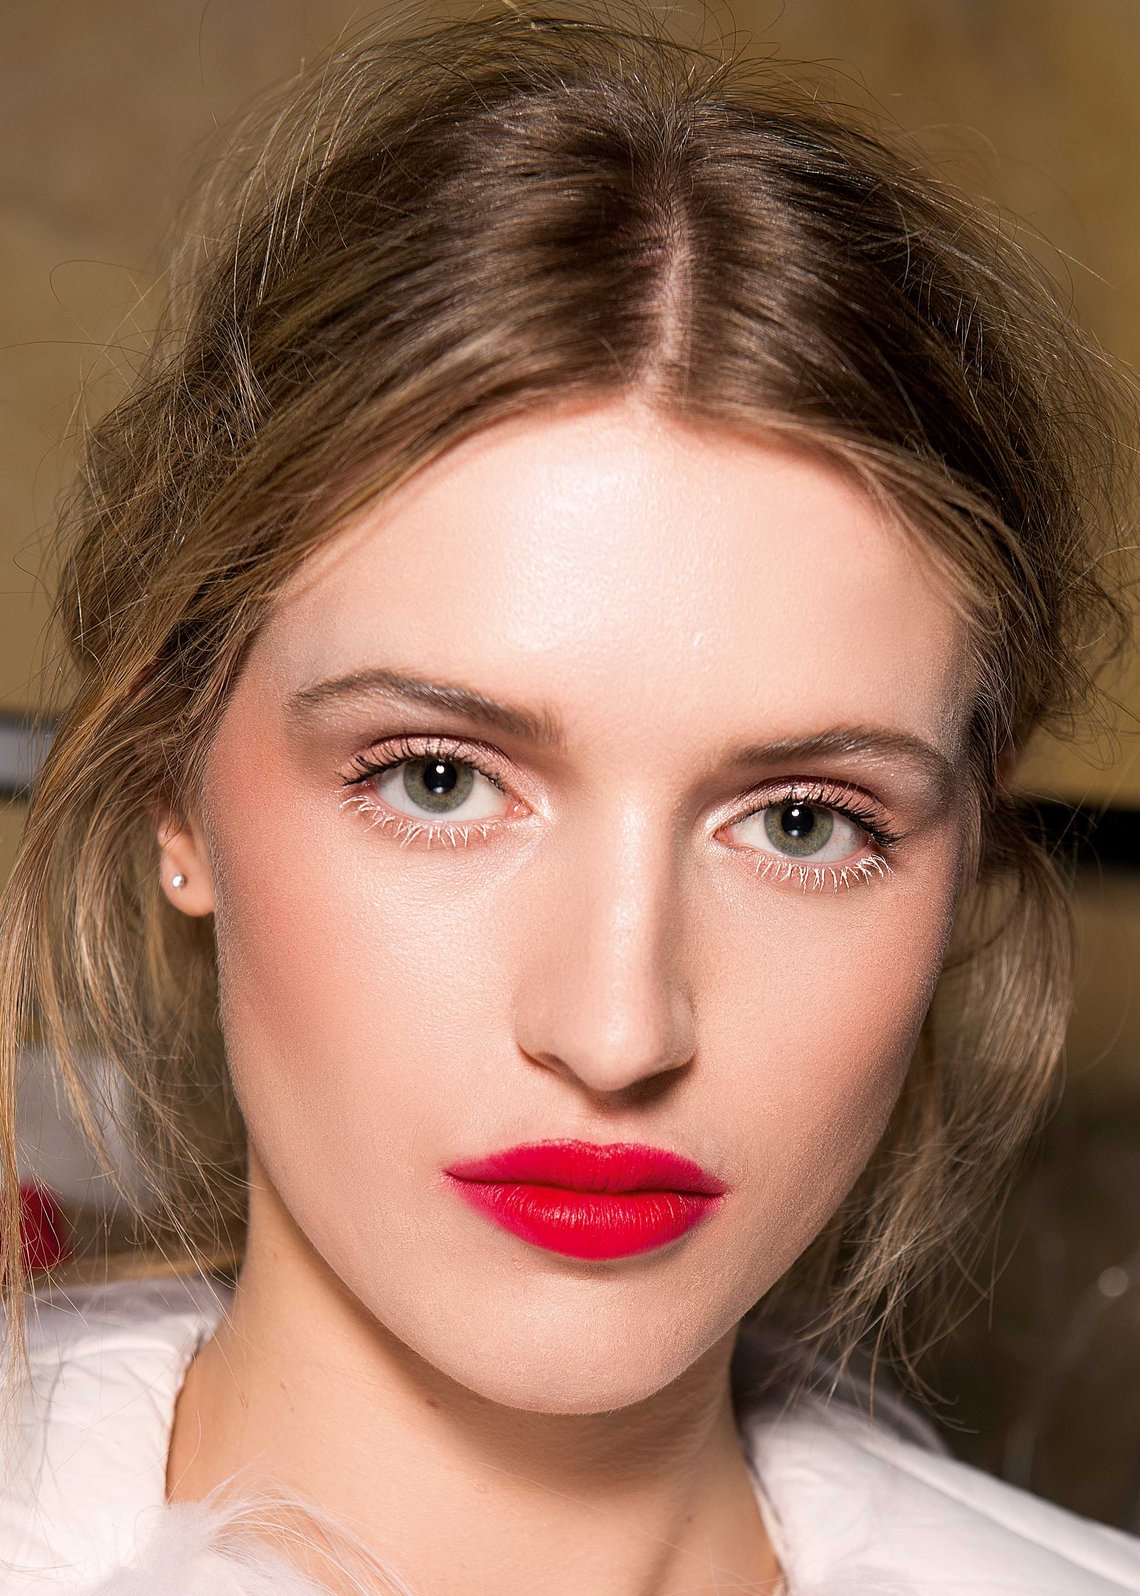 Model mit rotem Lippenstift